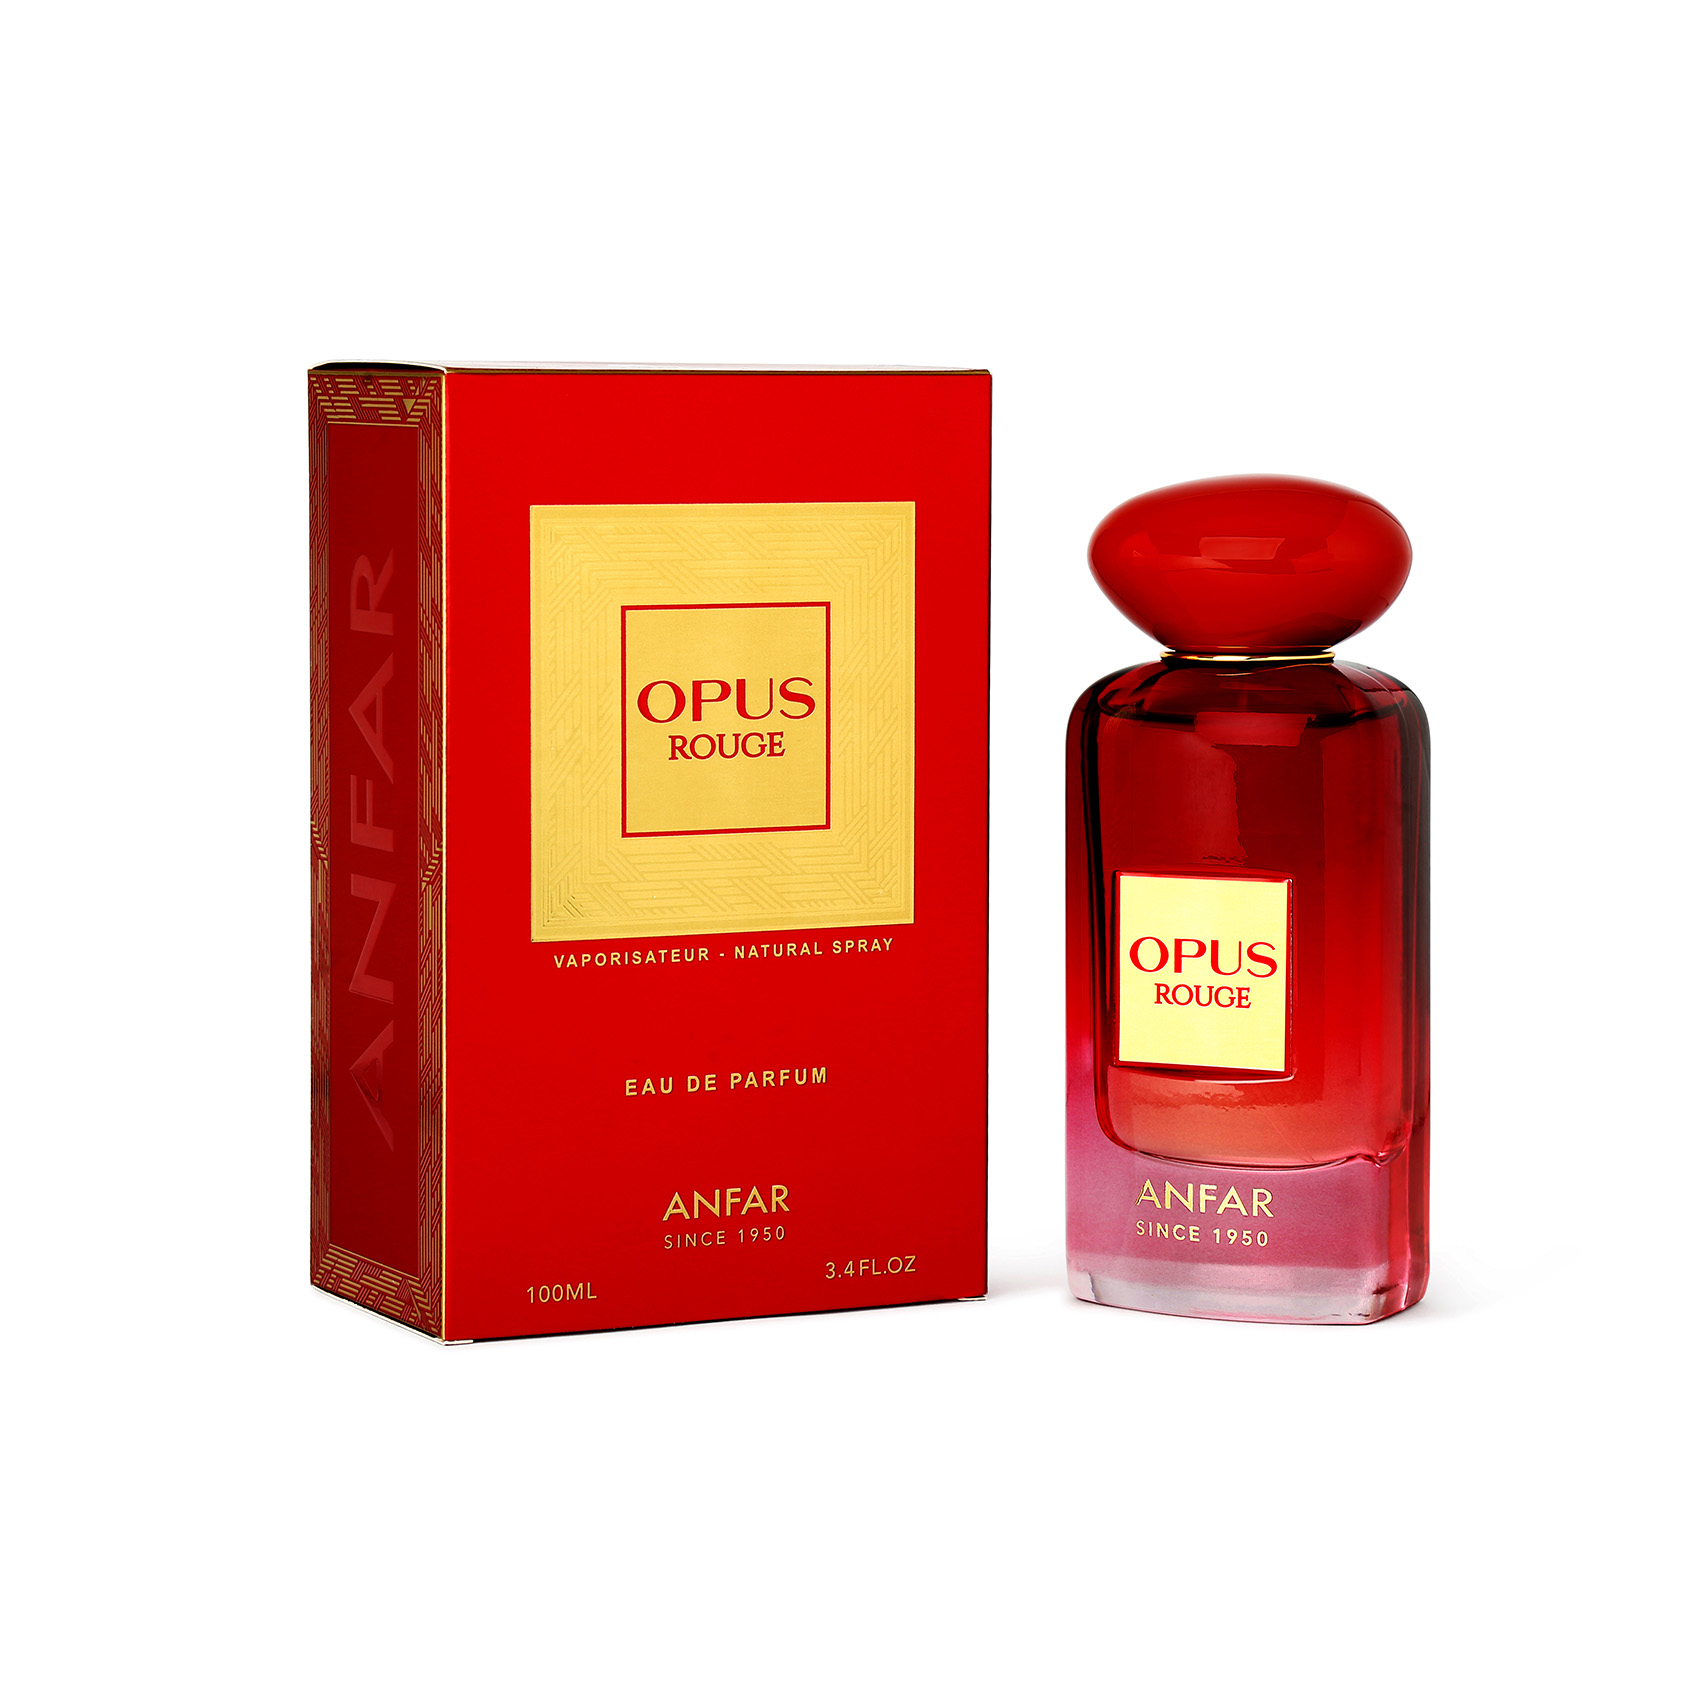 Opus Rouge Eau De Parfum 100ml Perfume For Men & Women  By Anfar- Made In India